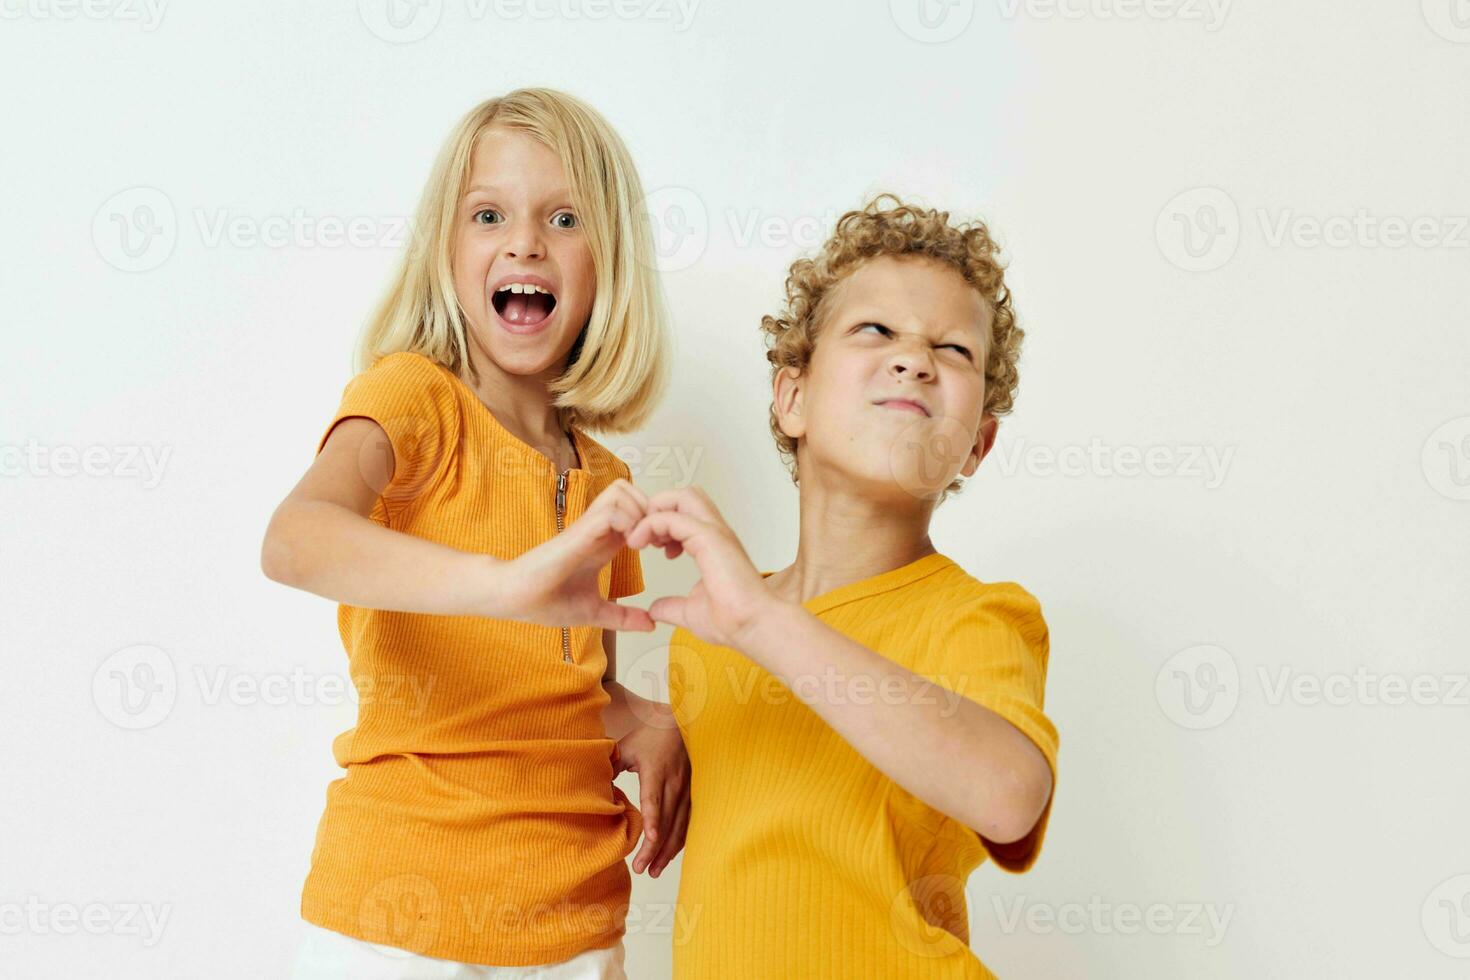 fofa Garoto e menina dentro amarelo Camisetas infância entretenimento estúdio foto